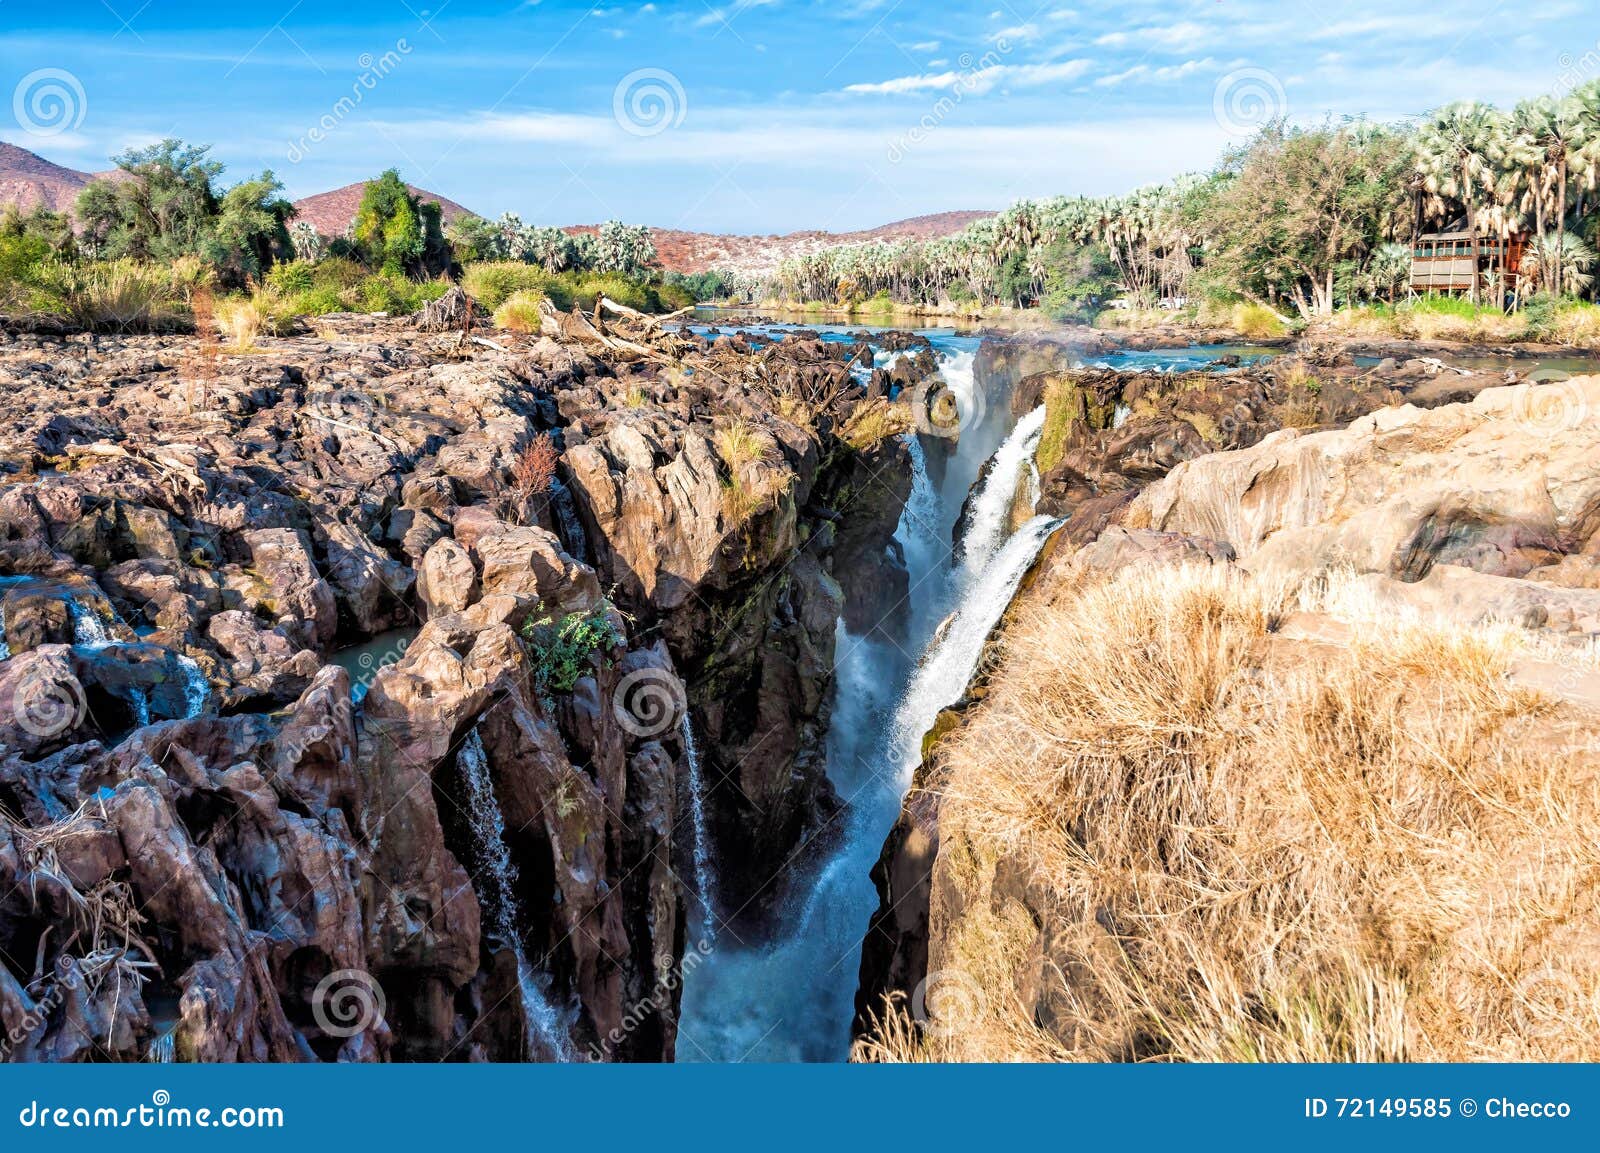 epupa falls on the border of namibia and angola